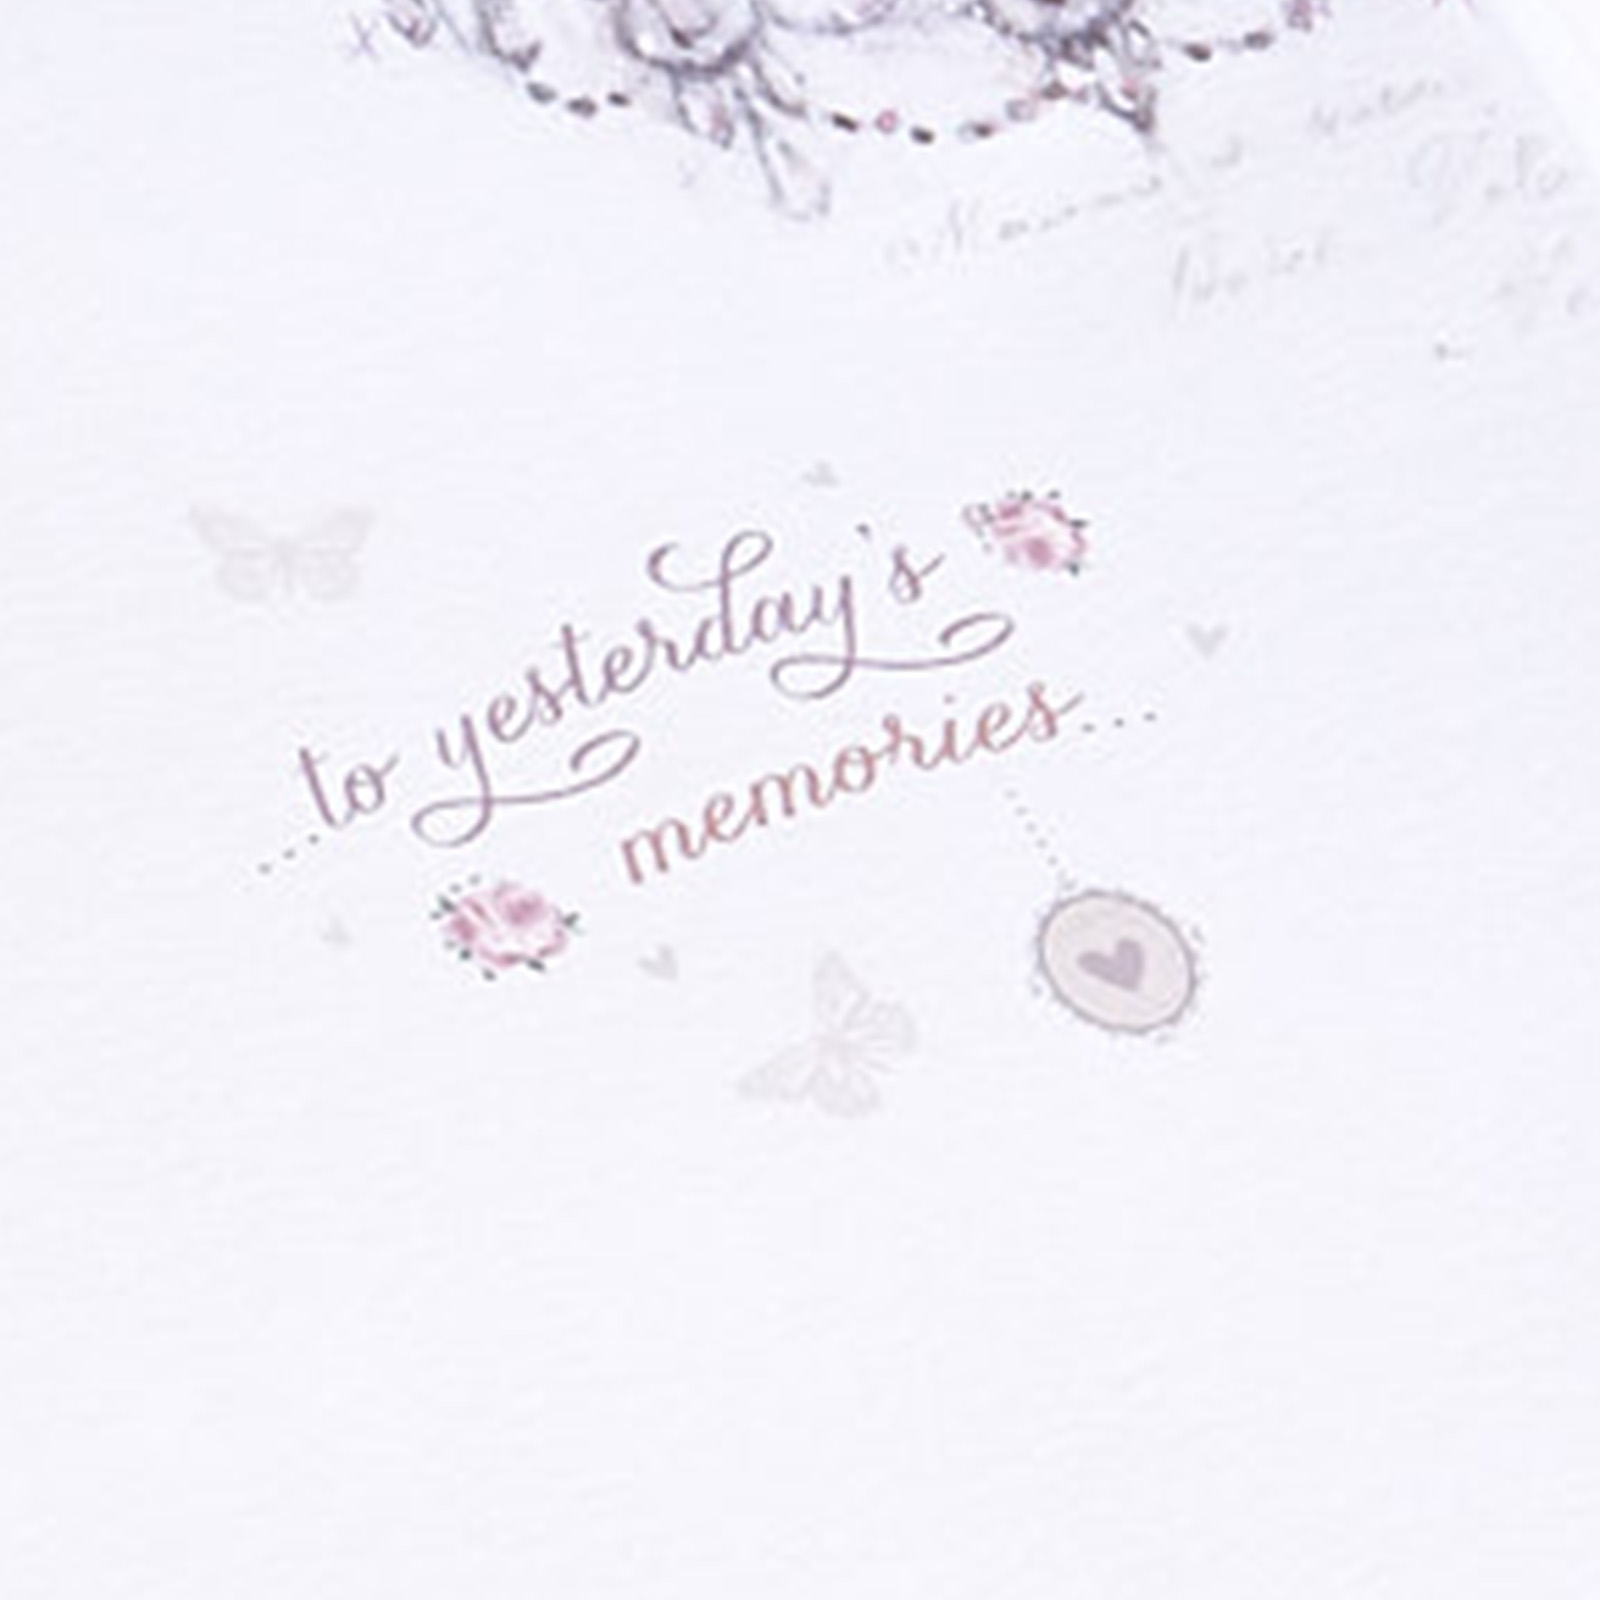 Anniversary Card - Bride & Groom Dancing